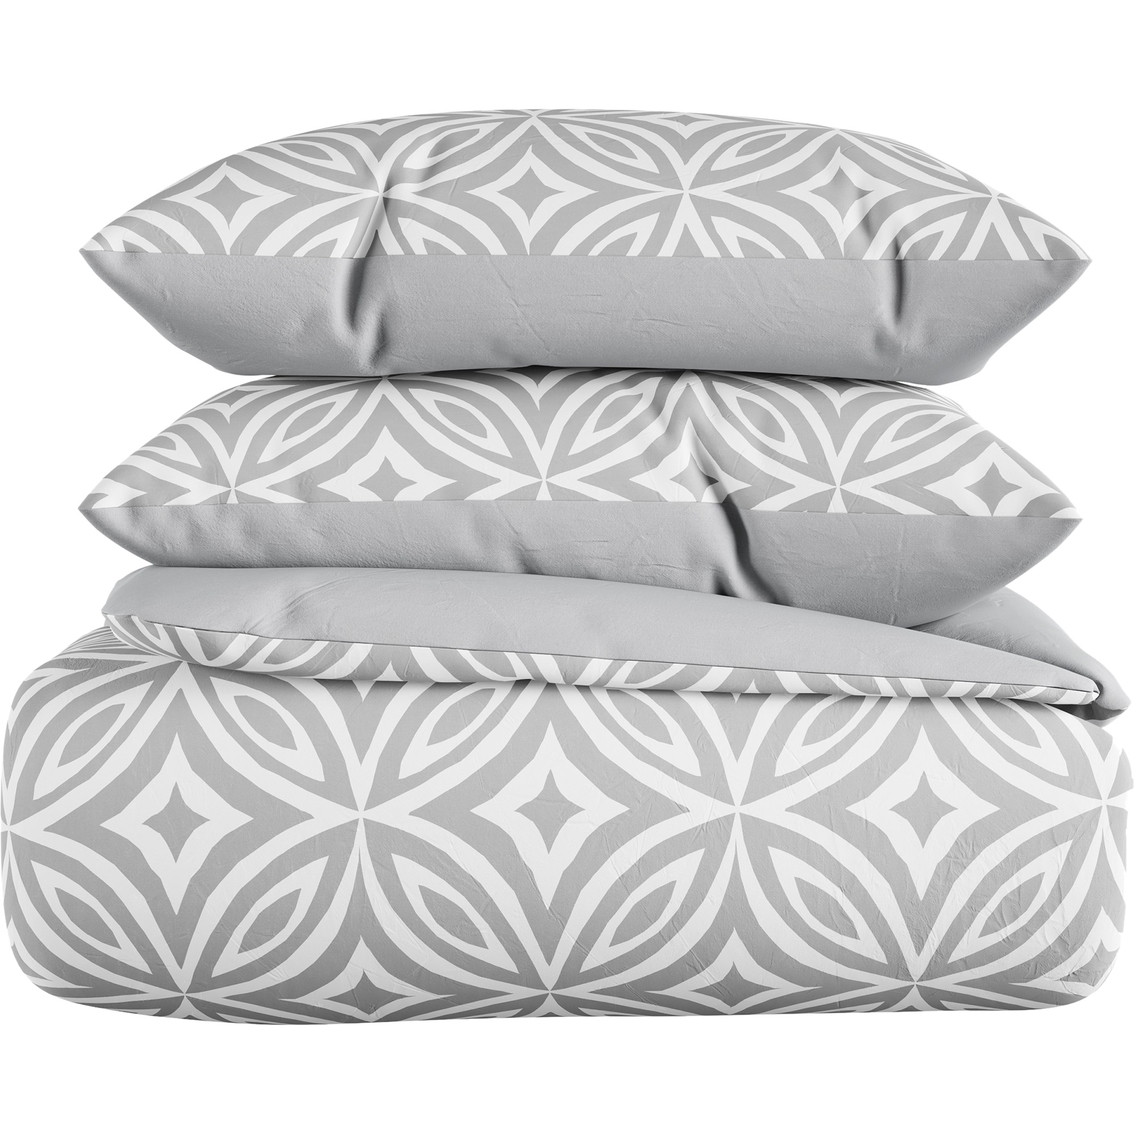 Lavish Home Radiance 3 pc. Comforter Set - Image 4 of 6